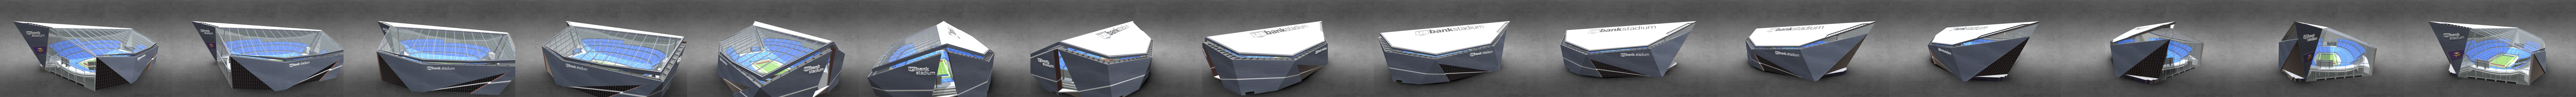 US Bank Stadium - Minneapolis USA | 3D model